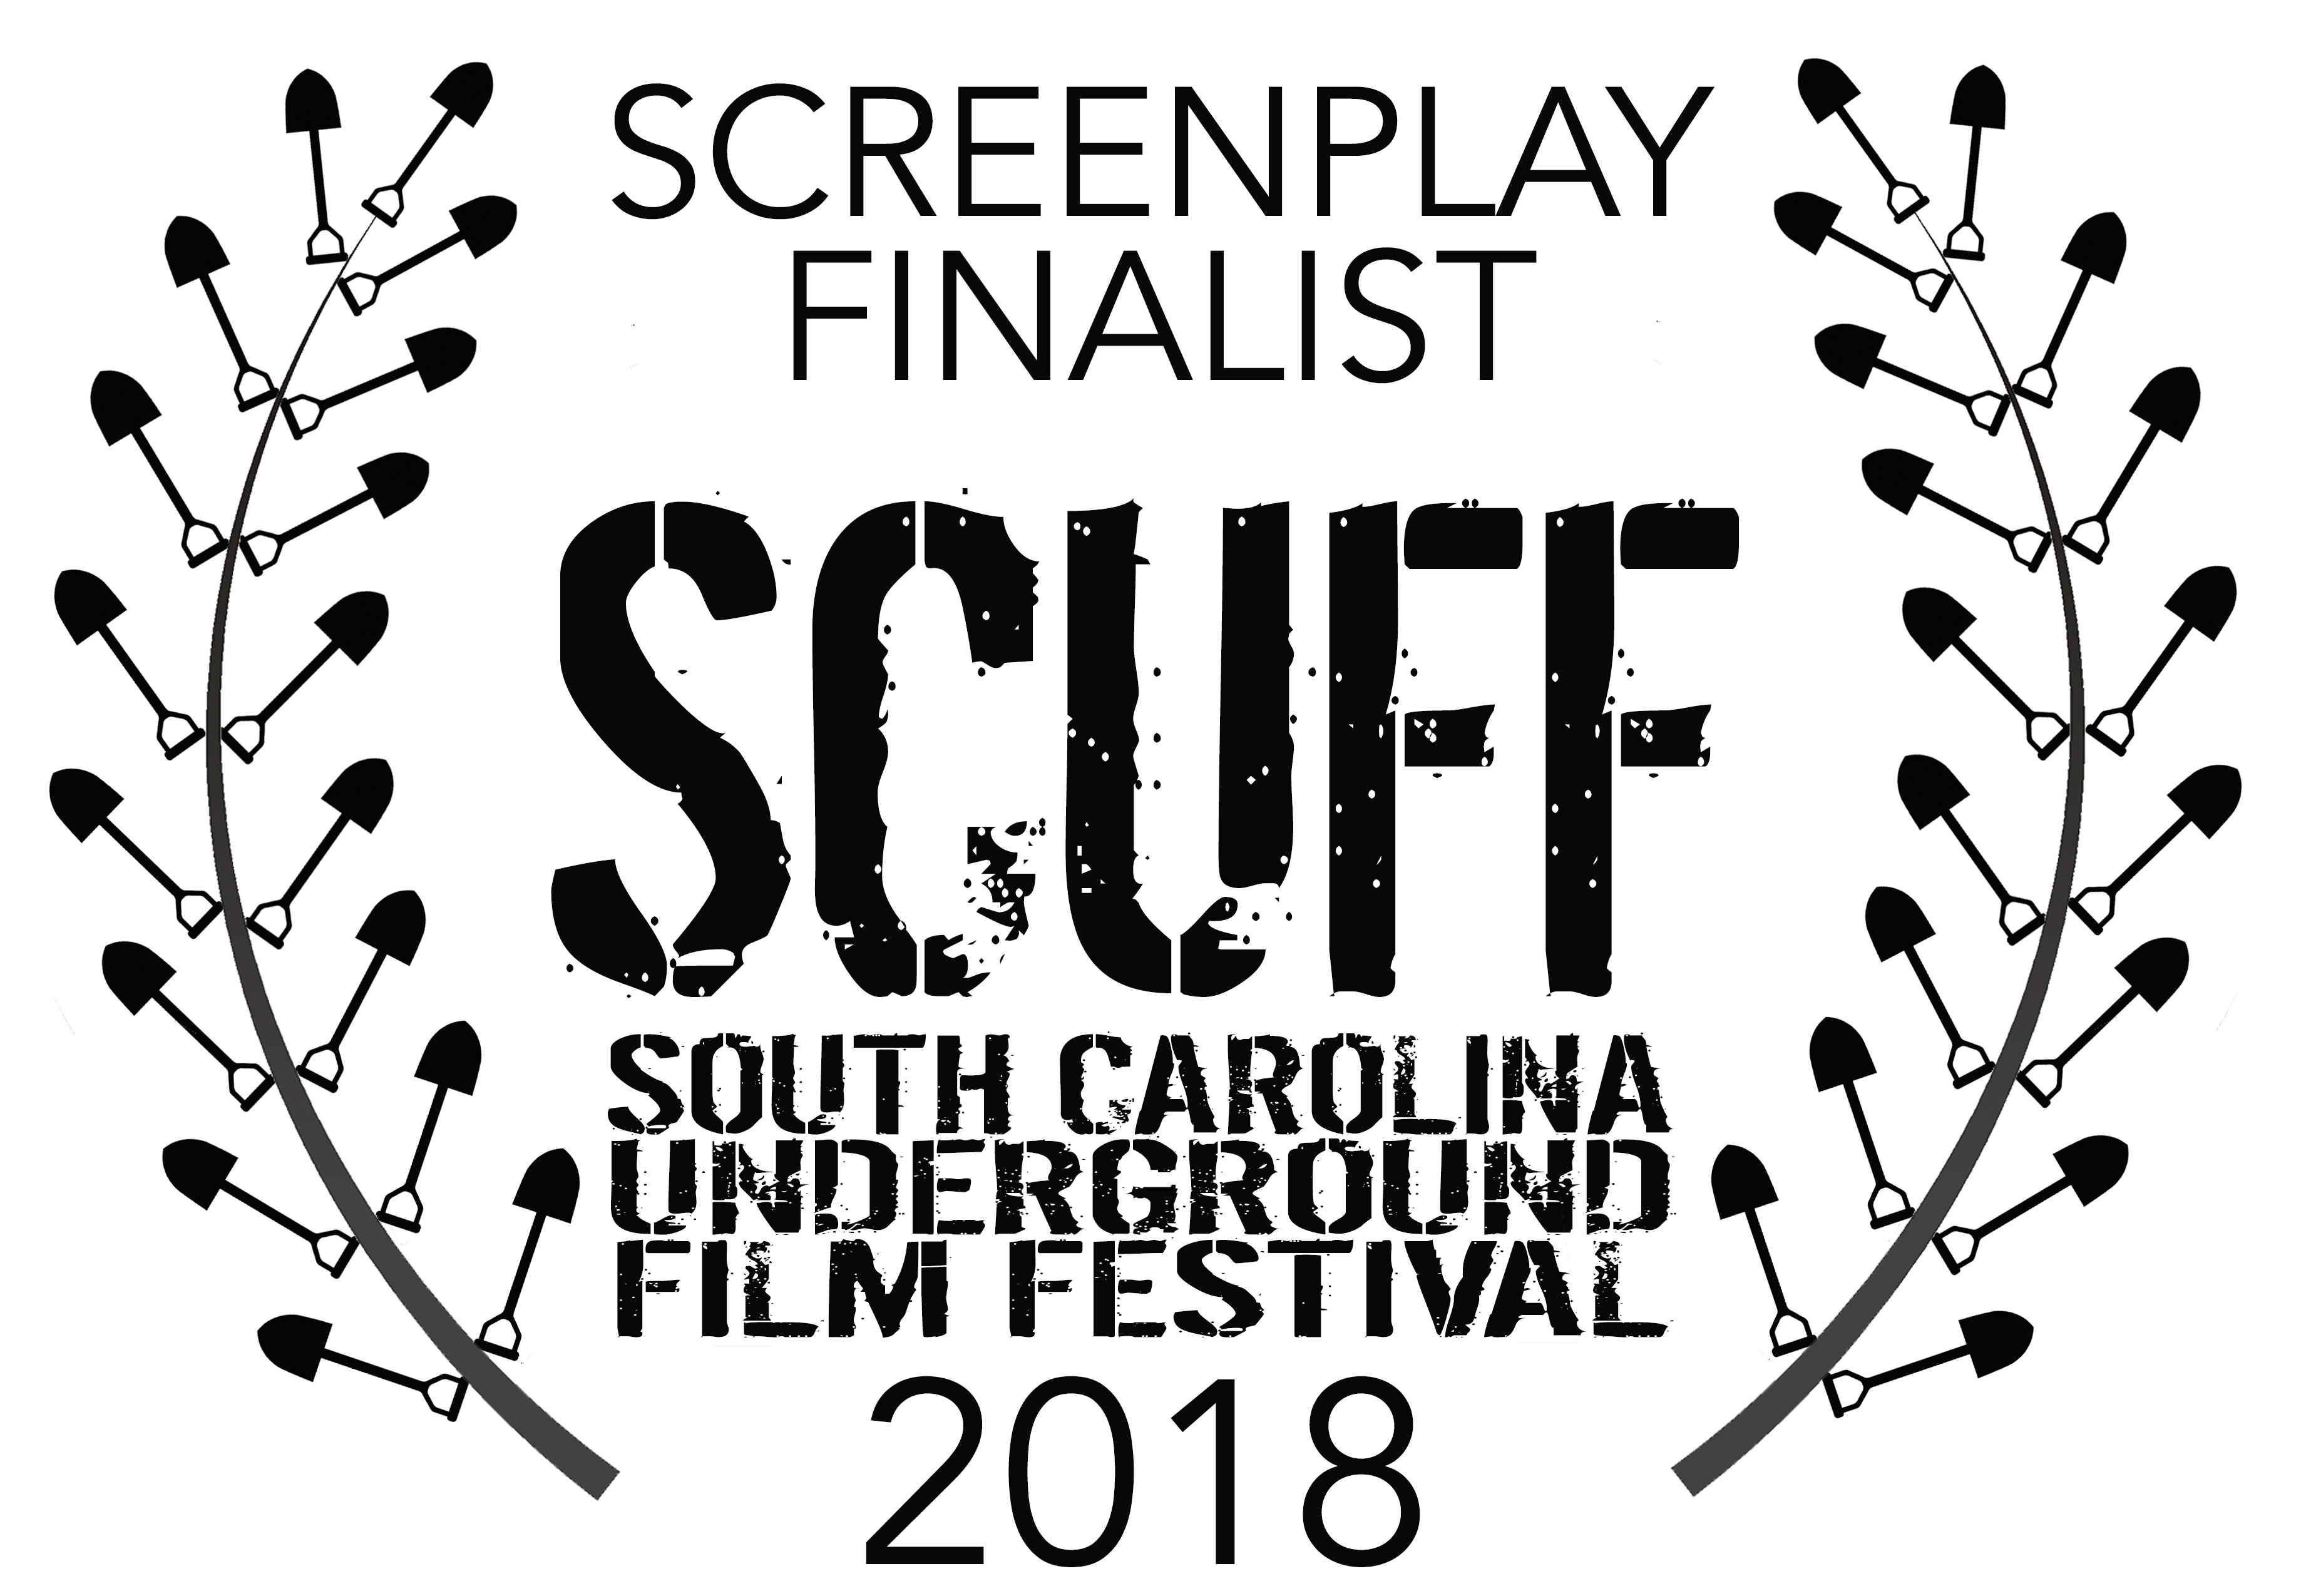 2018 South Carolina Underground Film Festival Screenplay Finalist